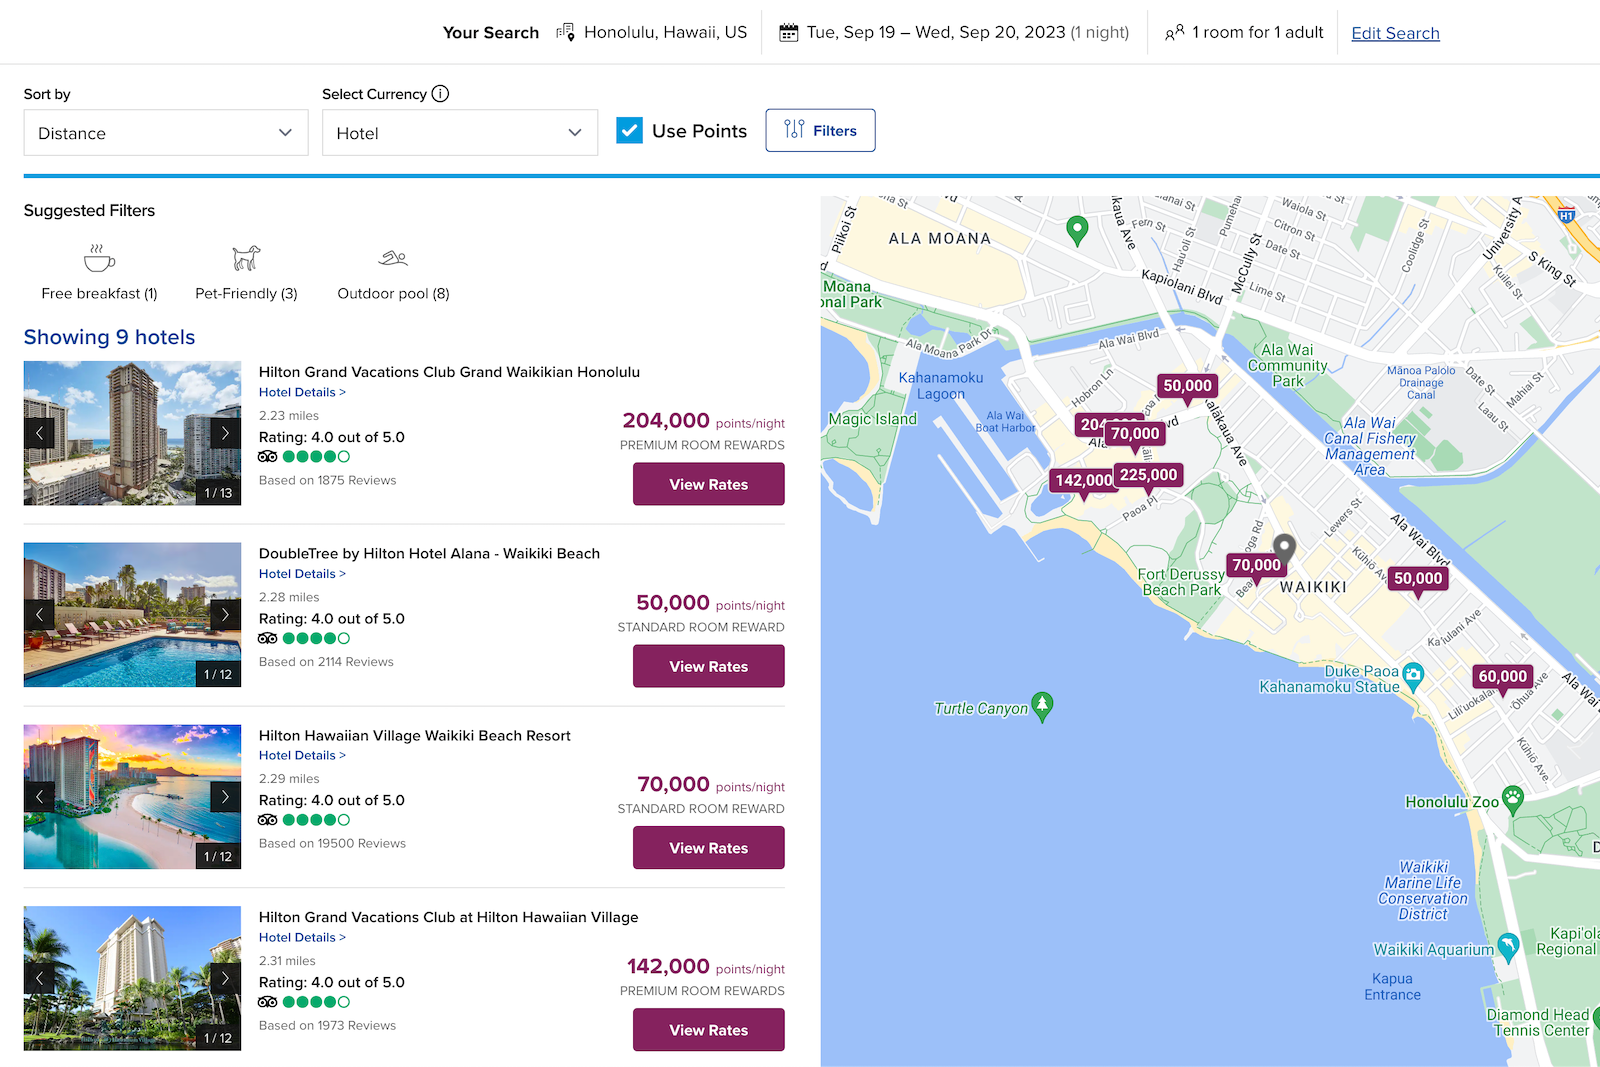 hotel search using Hilton points in Honolulu